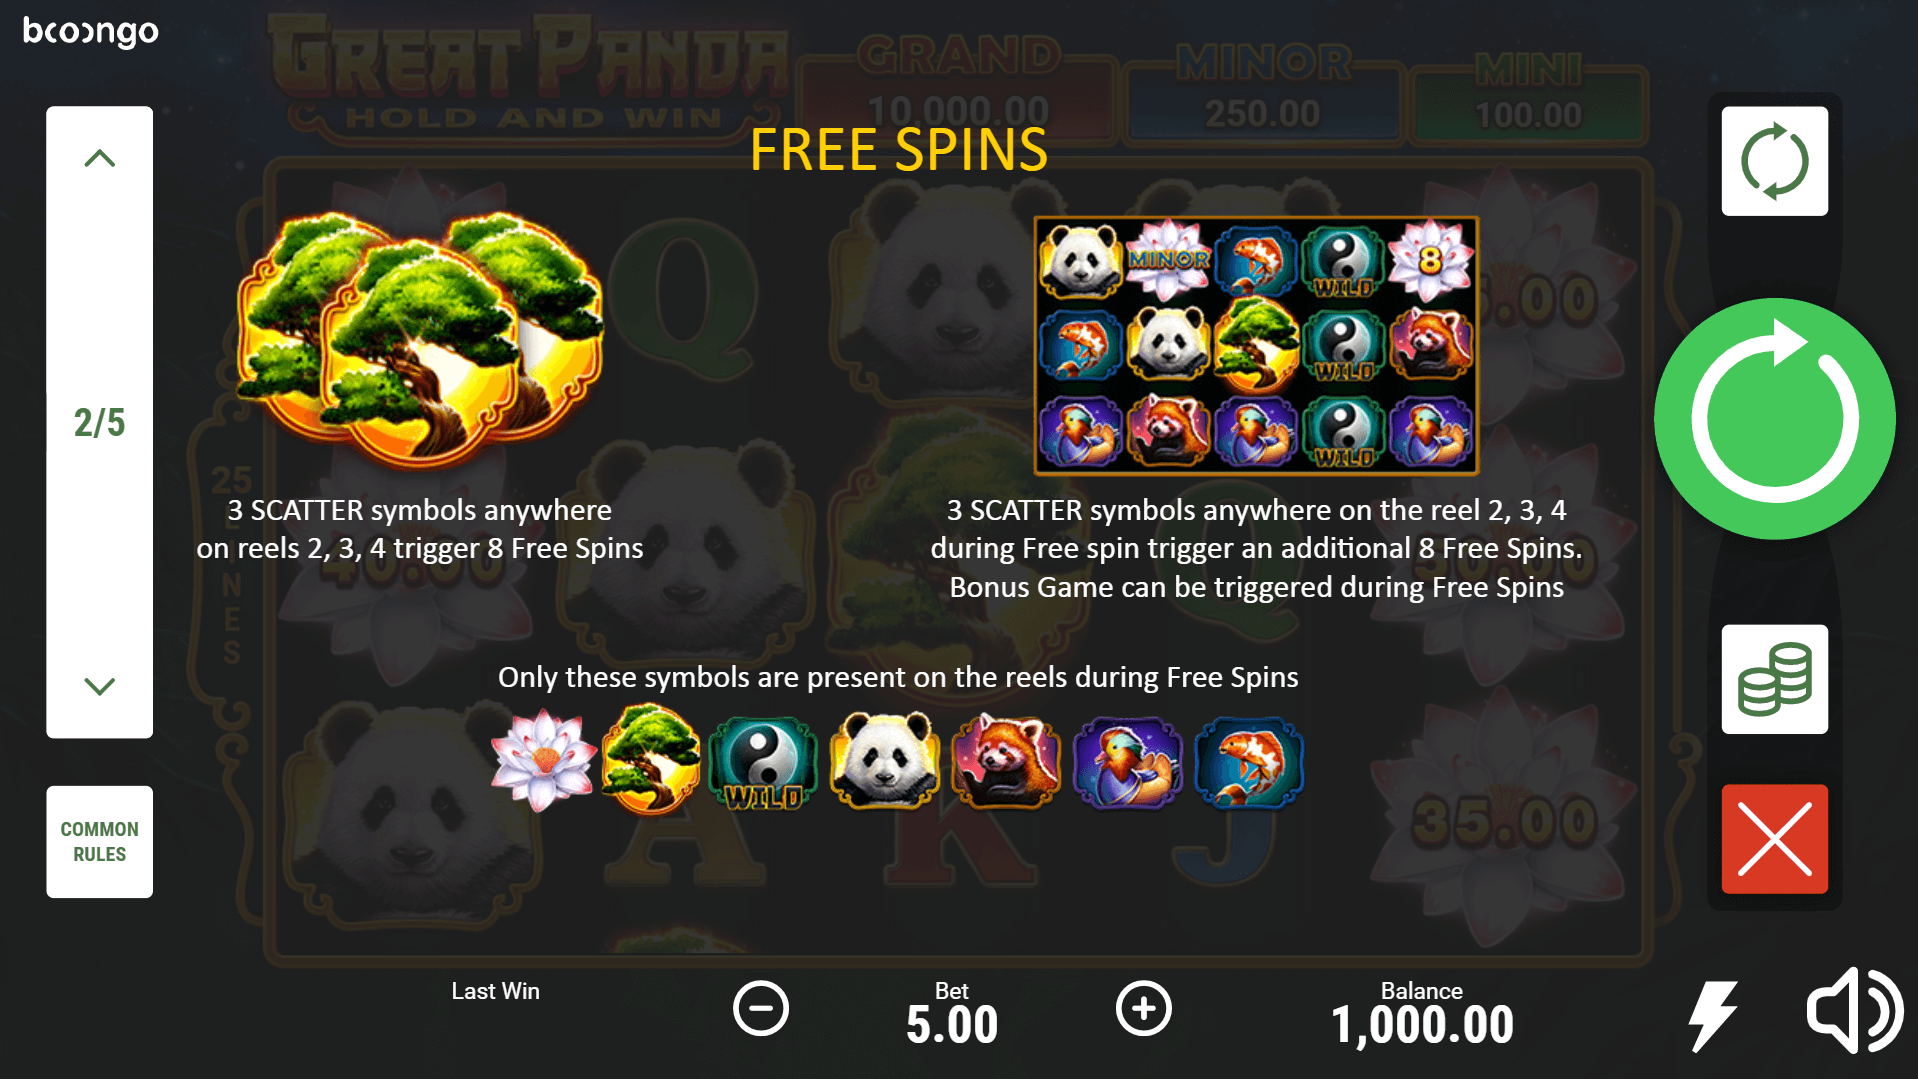 great panda slot machine detail image 1